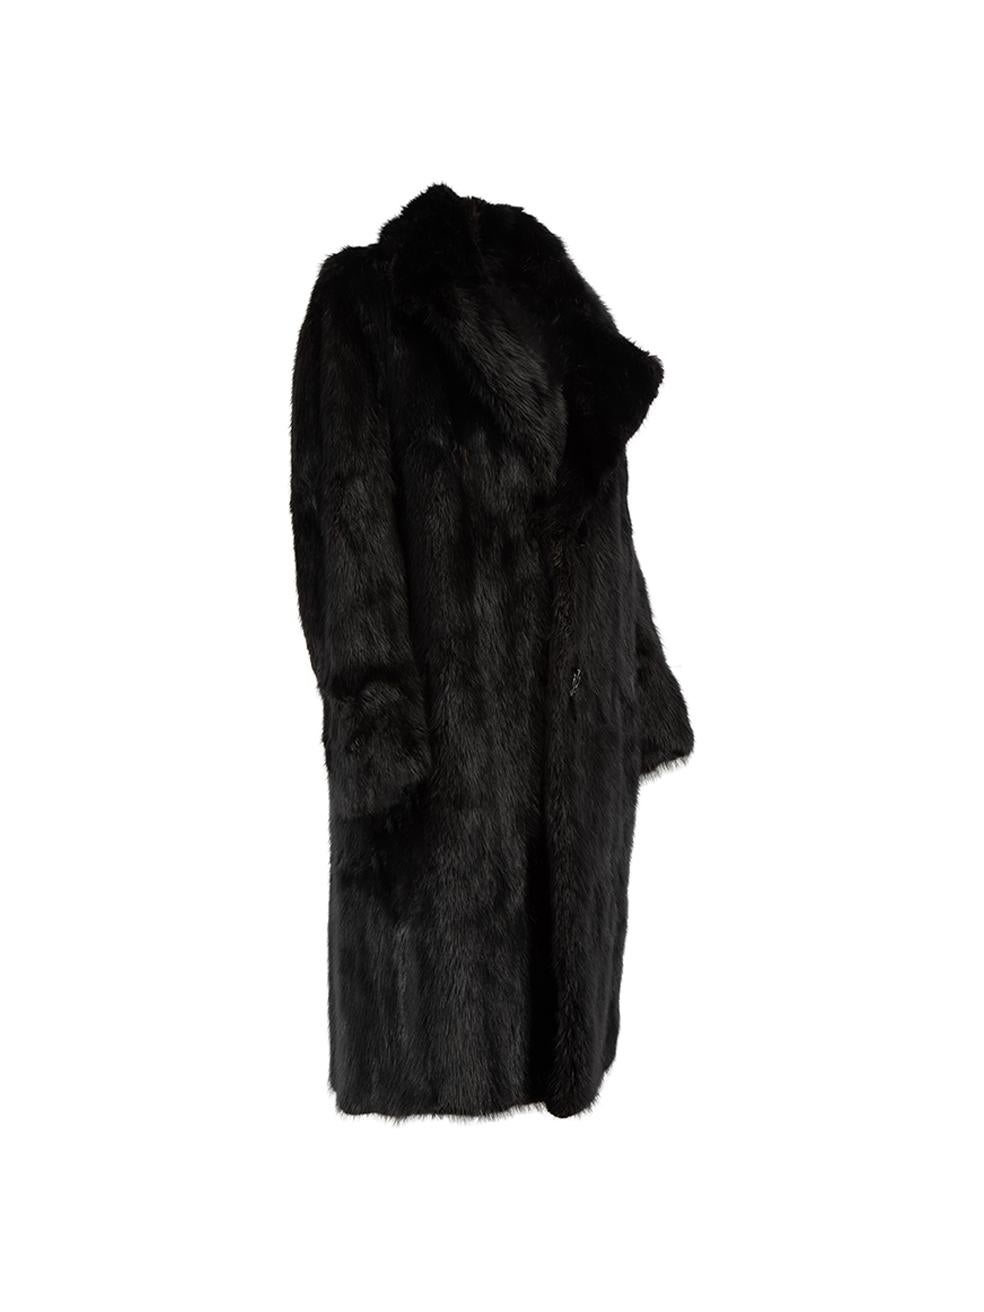 Pre-Loved Frank Gooney Women's Black Longline Fur Coat 2